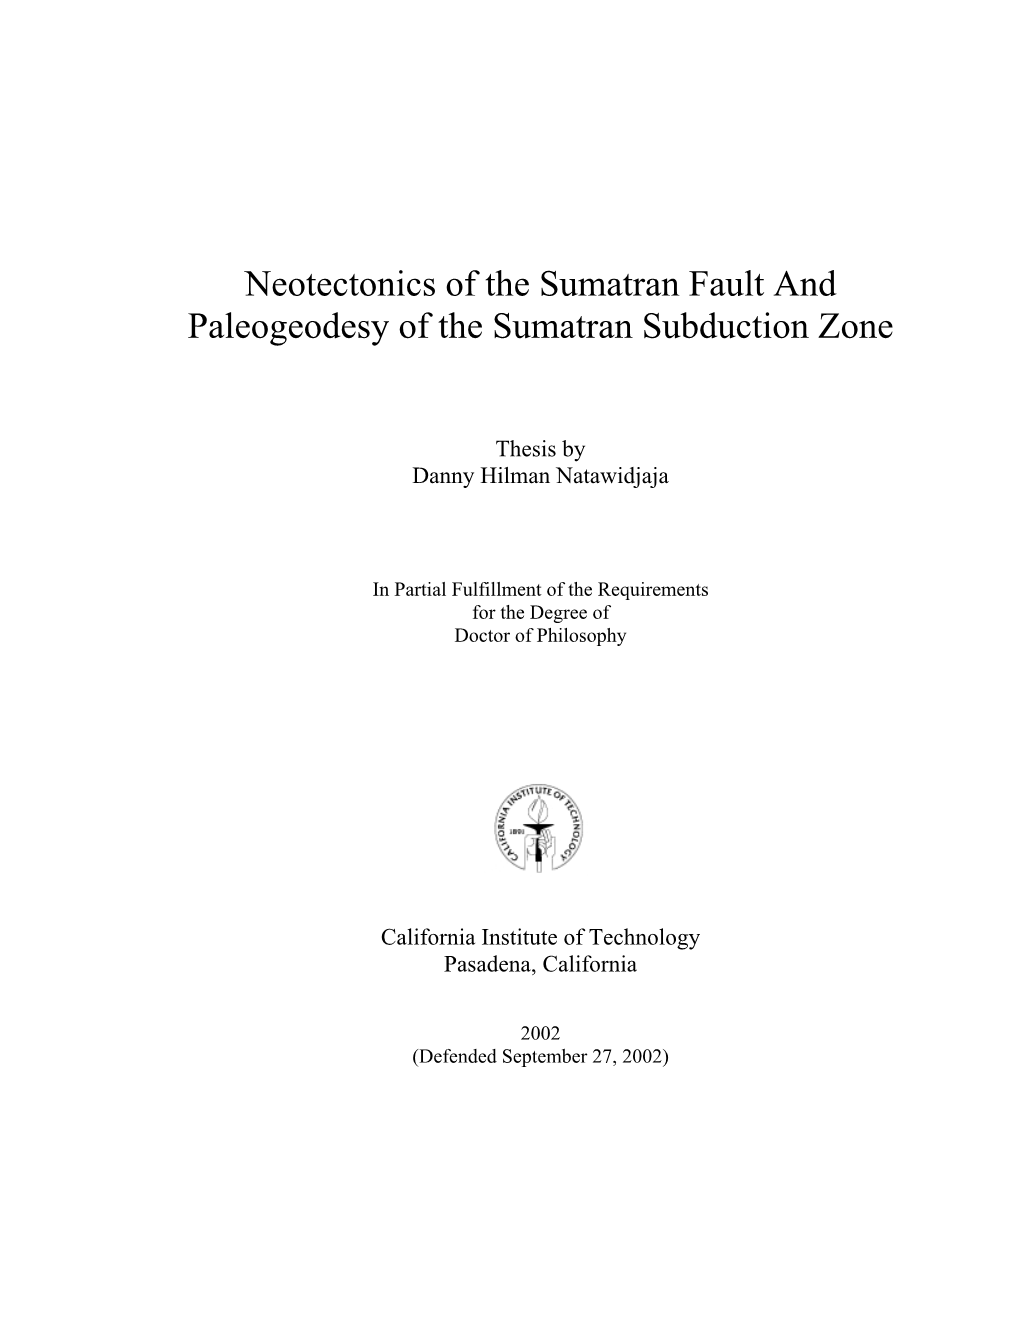 Neotectonics of the Sumatran Fault and Paleogeodesy of the Sumatran Subduction Zone